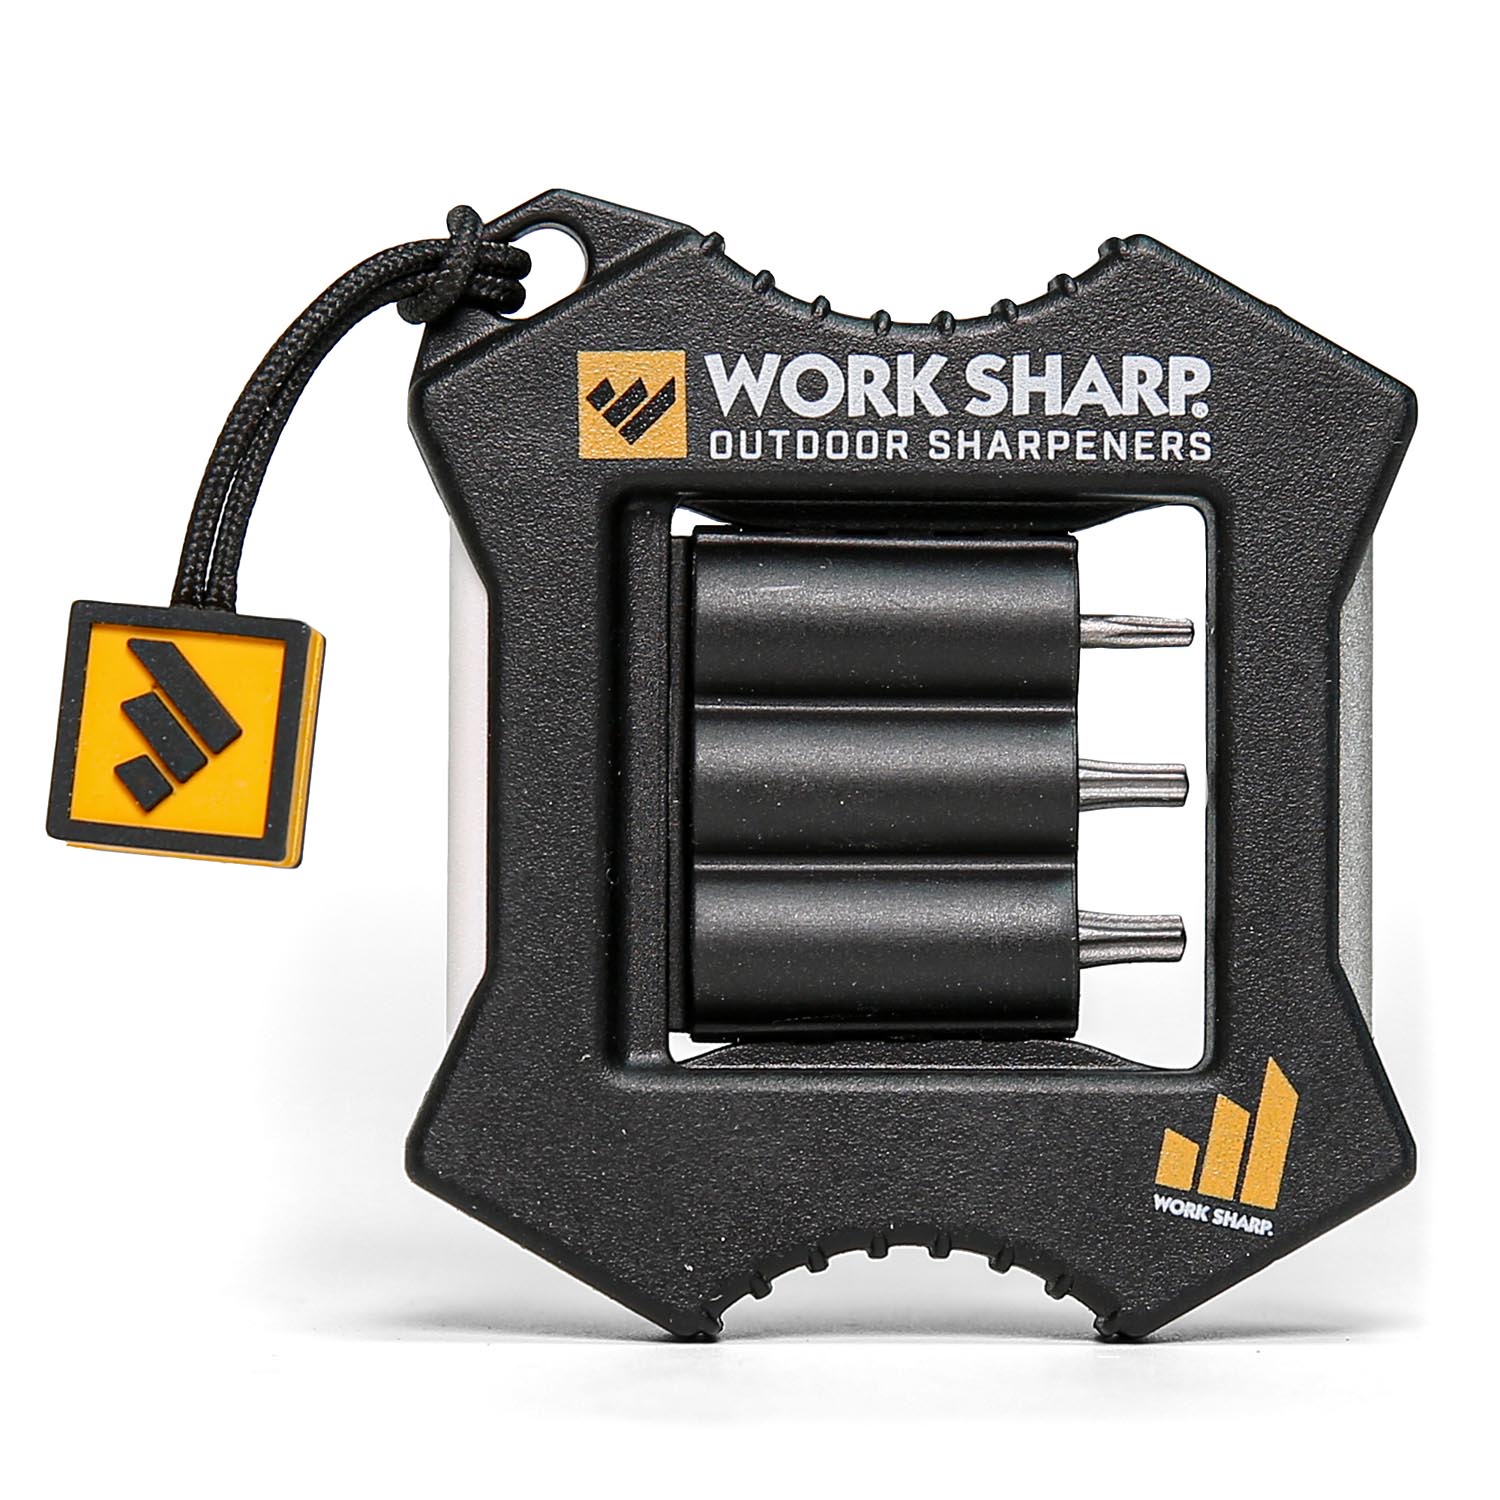 The Best Backcountry Sharpener - Work Sharp Sharpeners